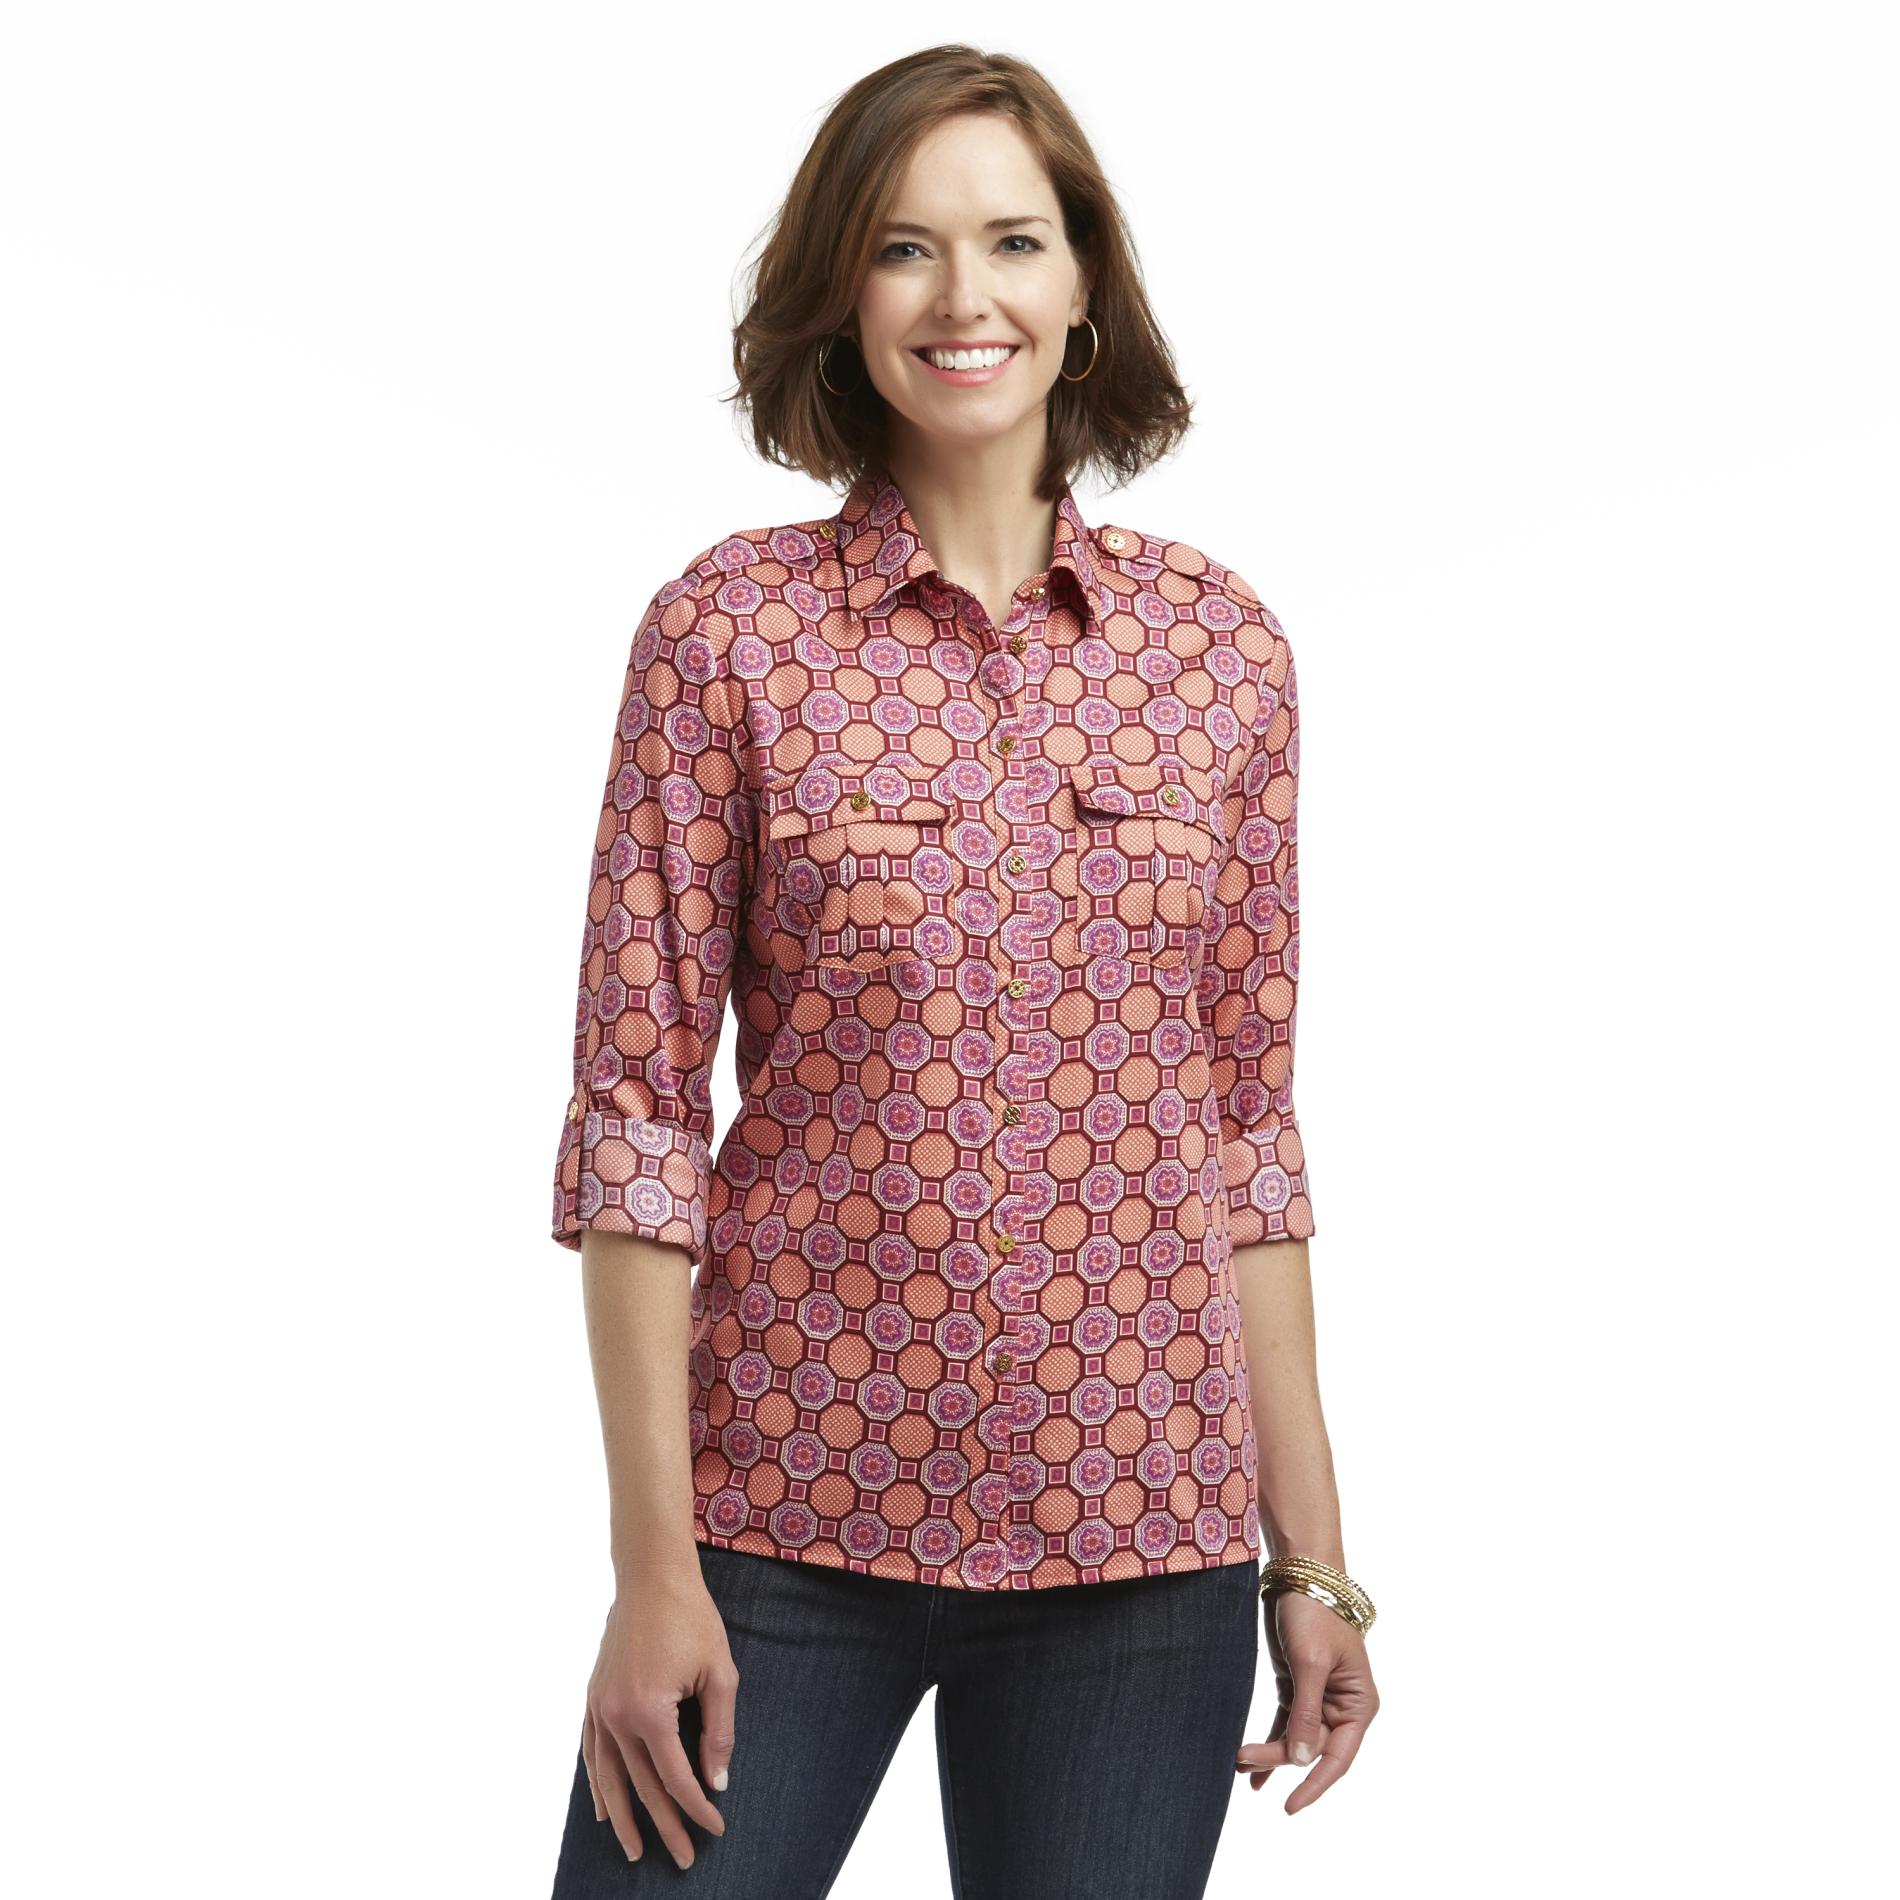 Jaclyn Smith Women's Utility Shirt - Geometric Print